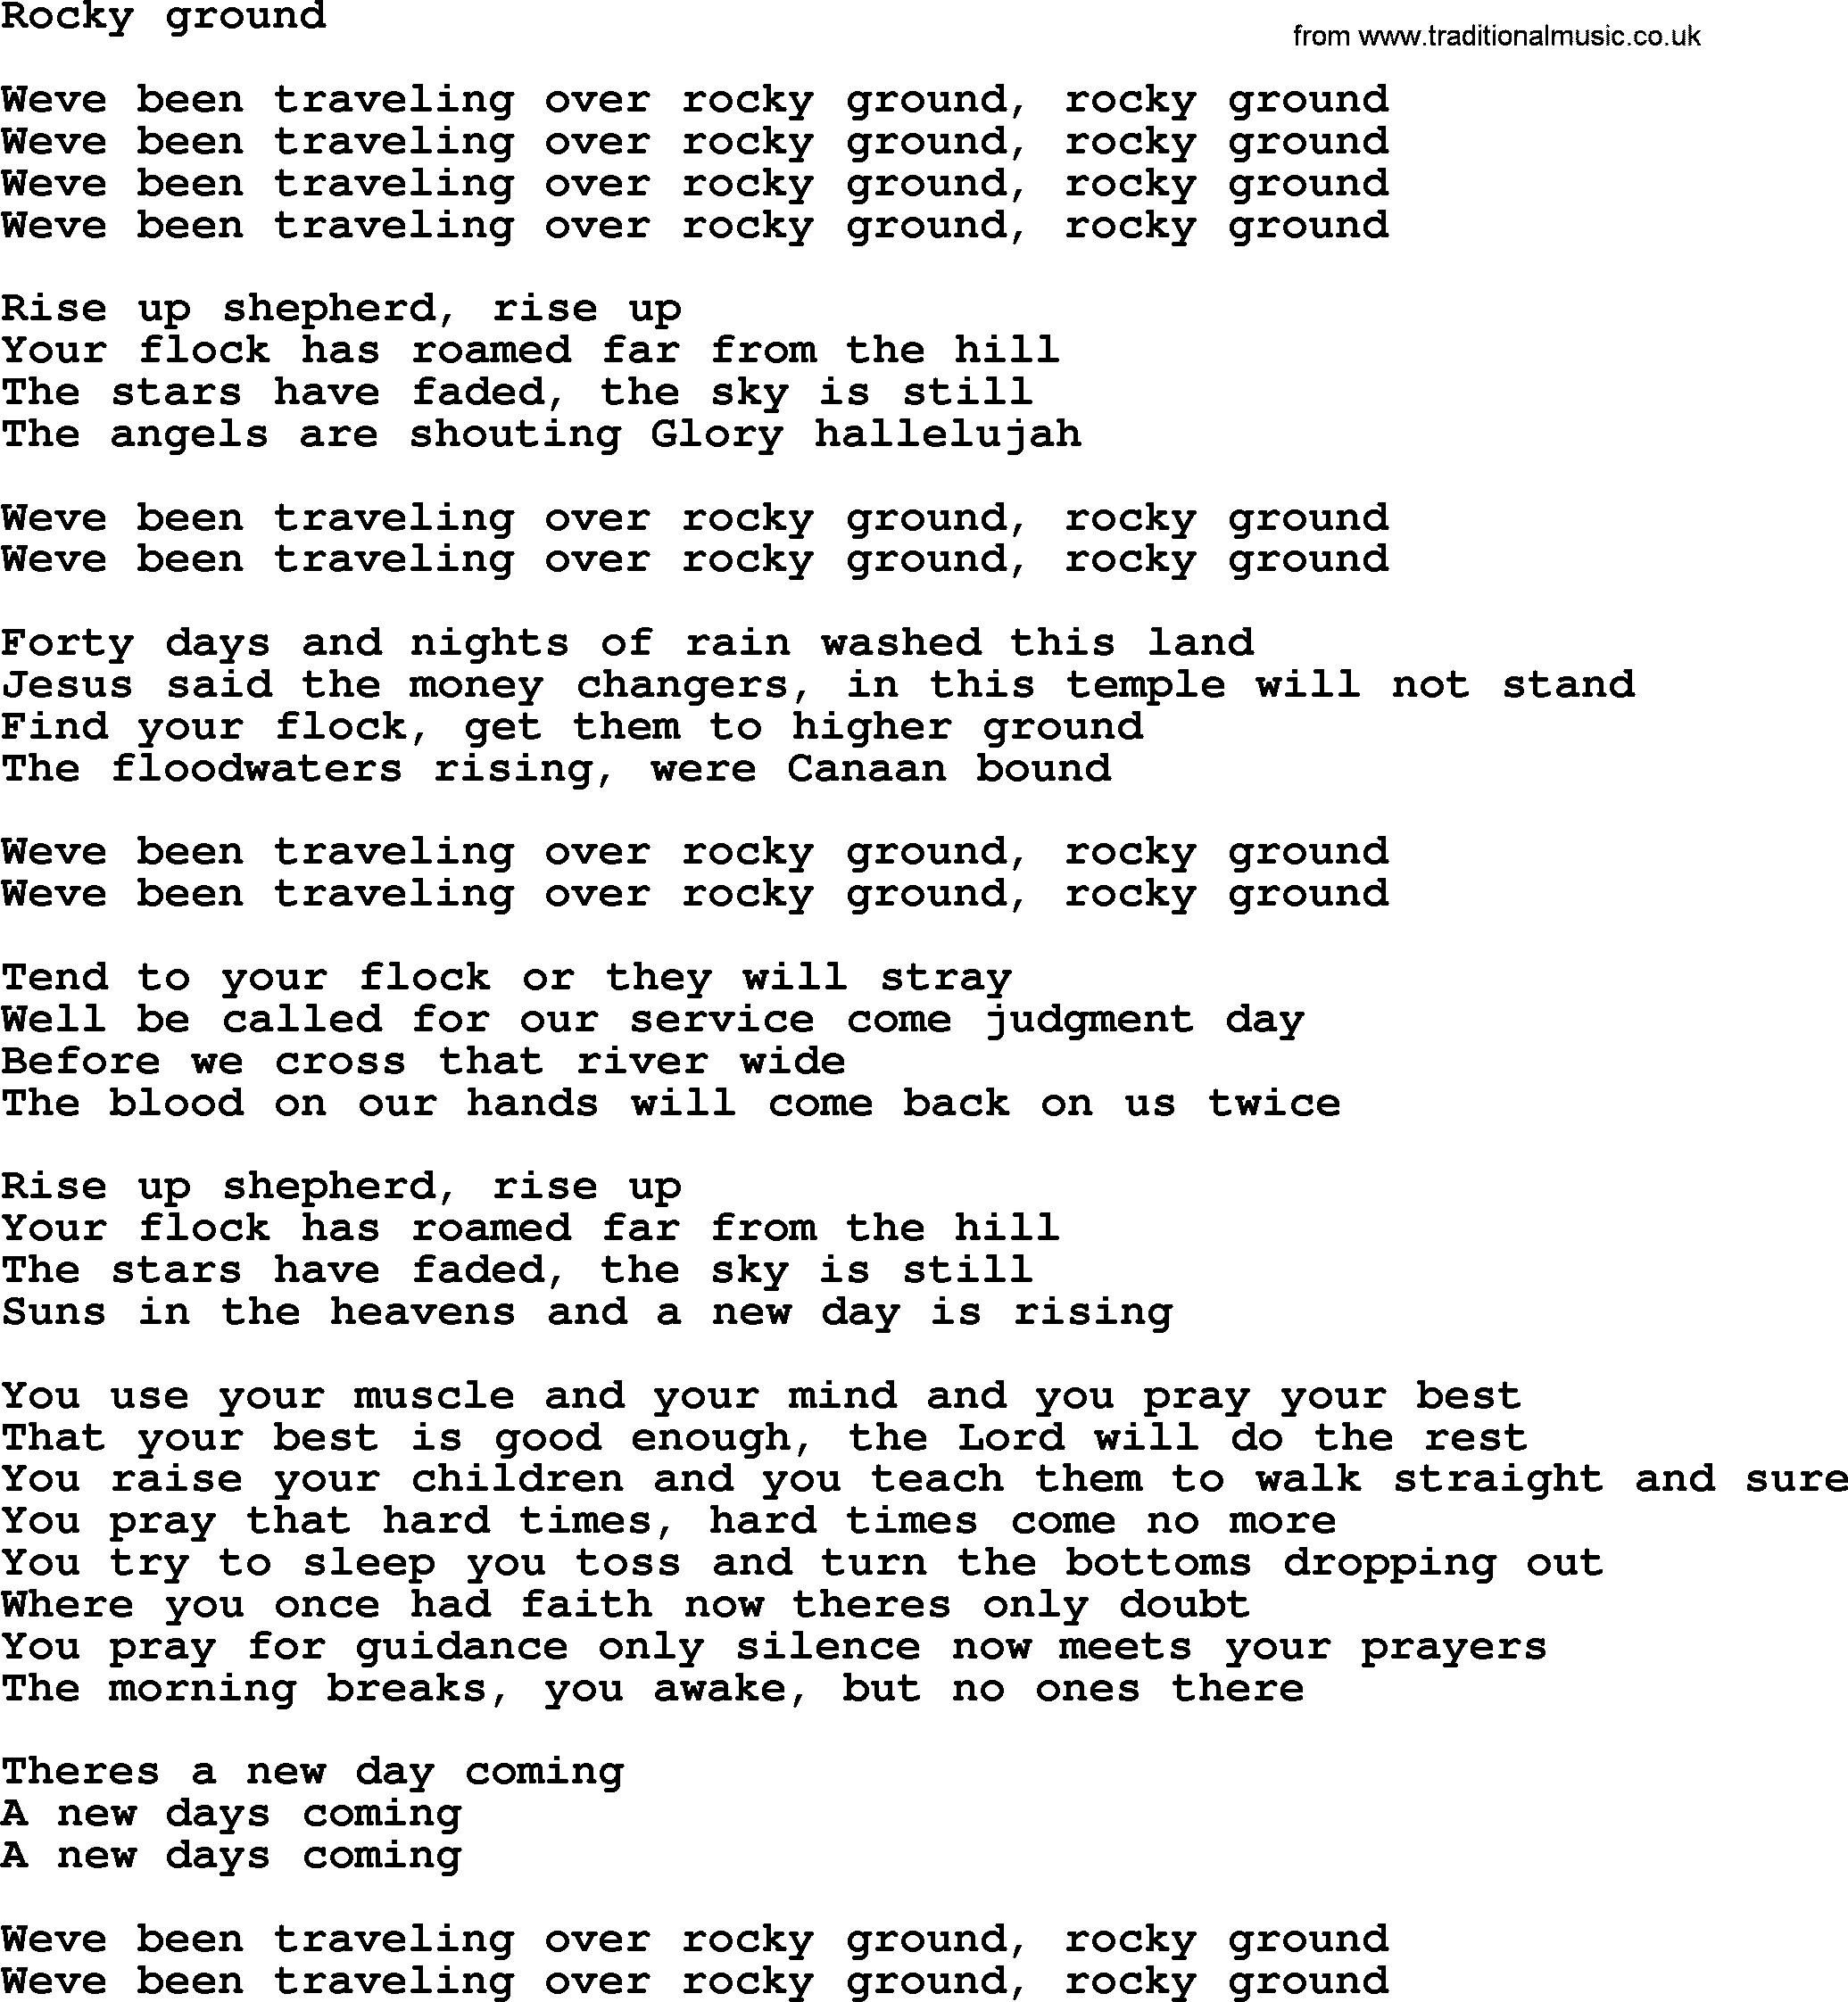 Bruce Springsteen song: Rocky Ground lyrics